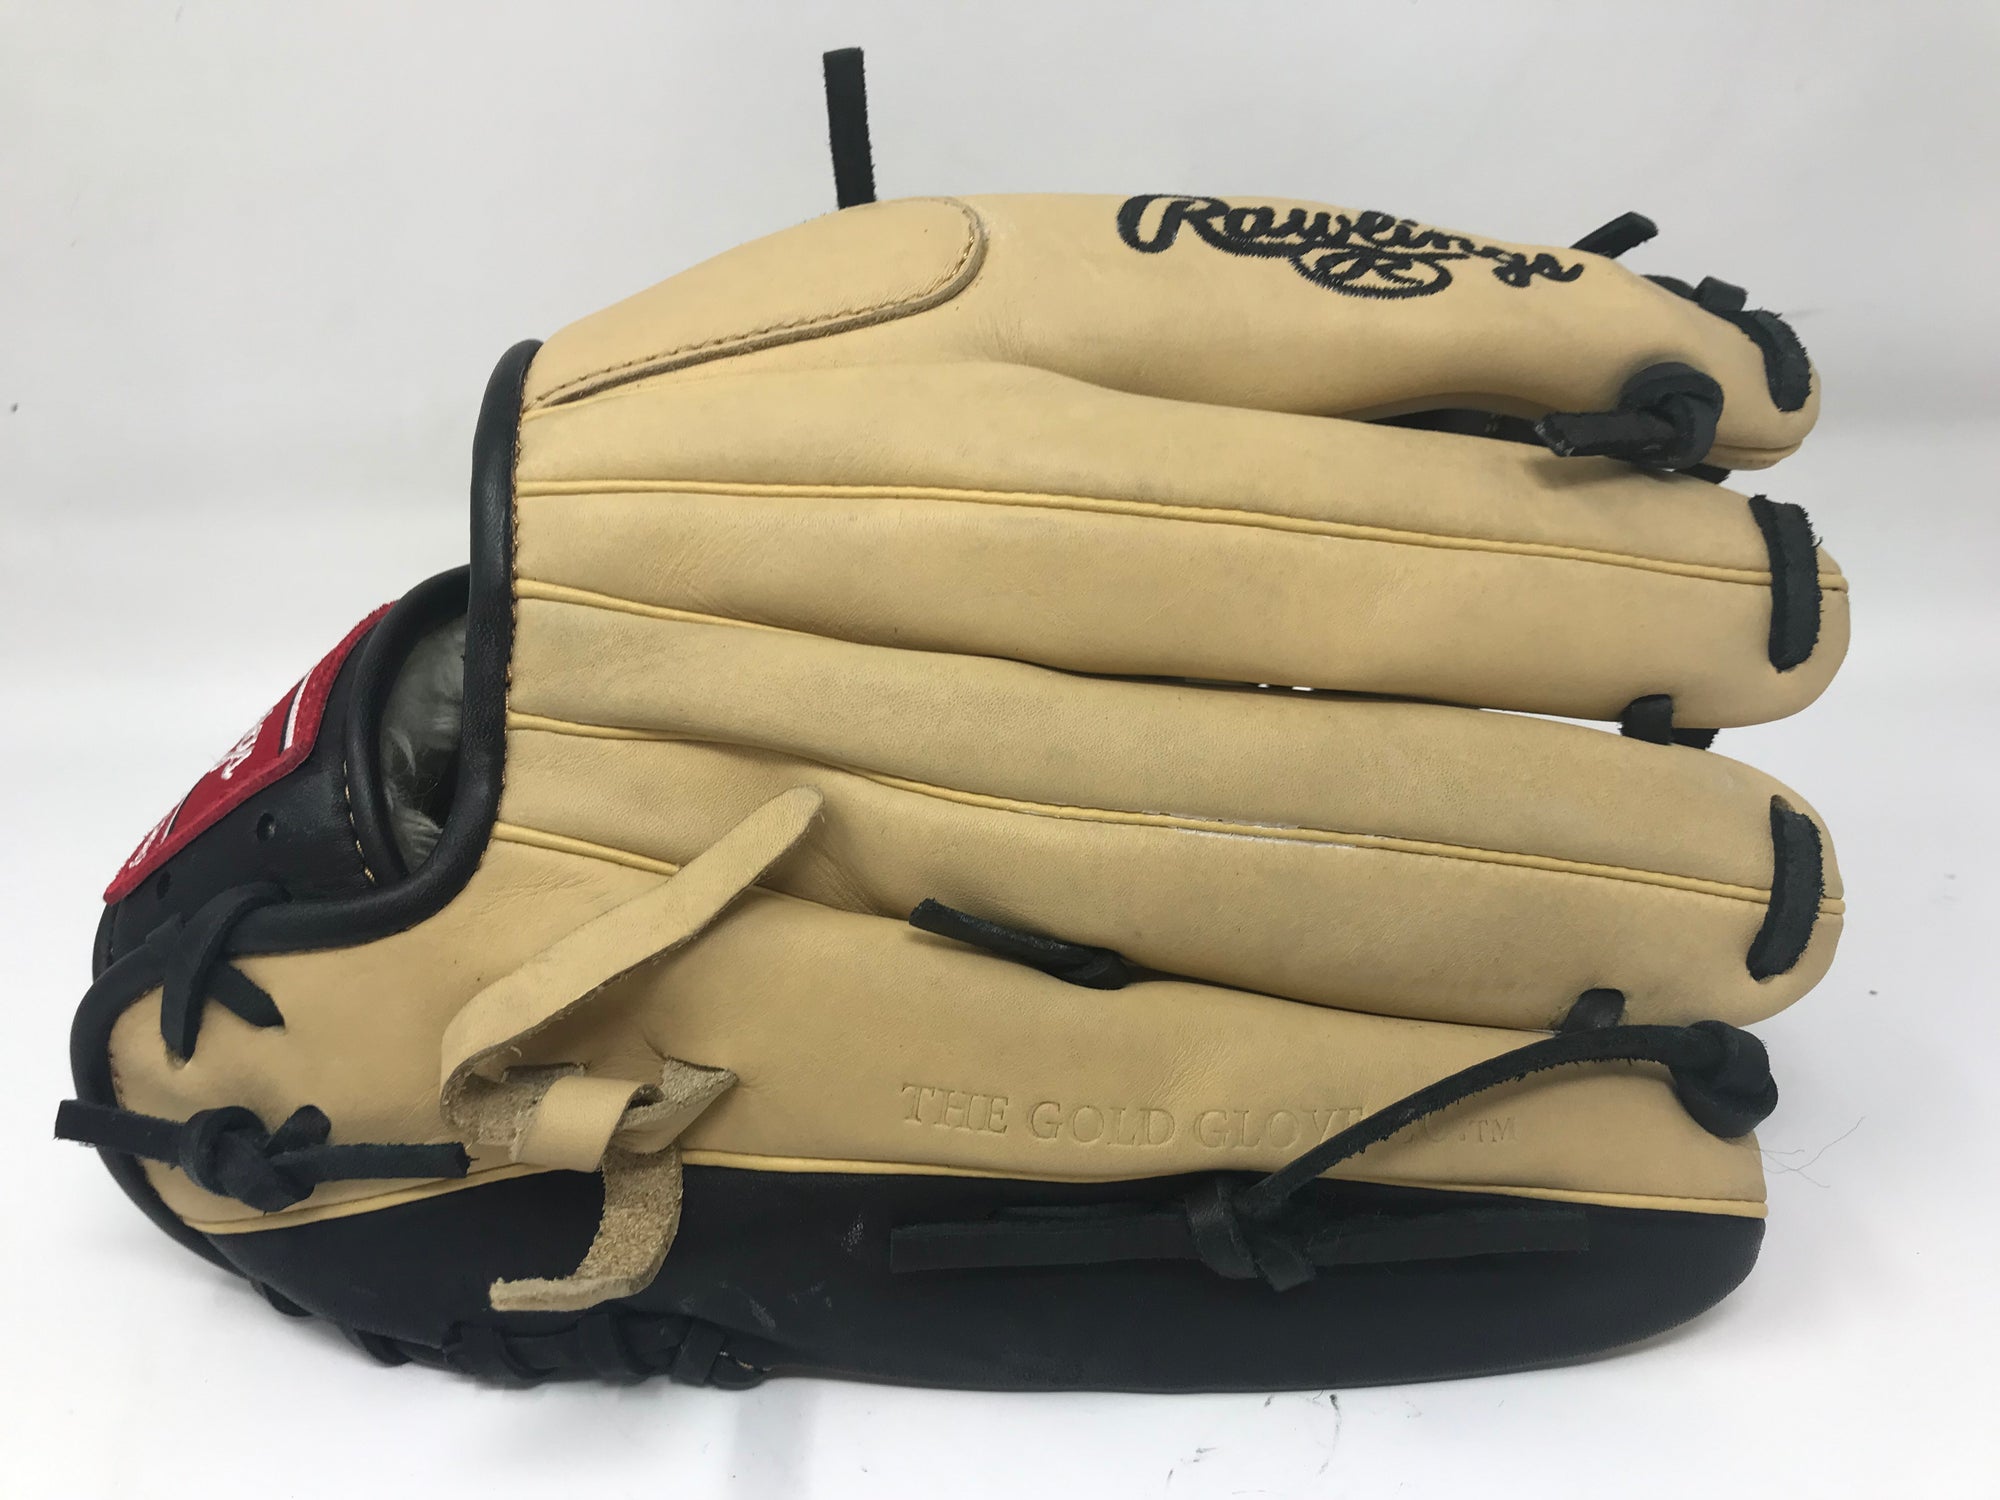 Rawlings 11.5'' GG Elite Series Glove